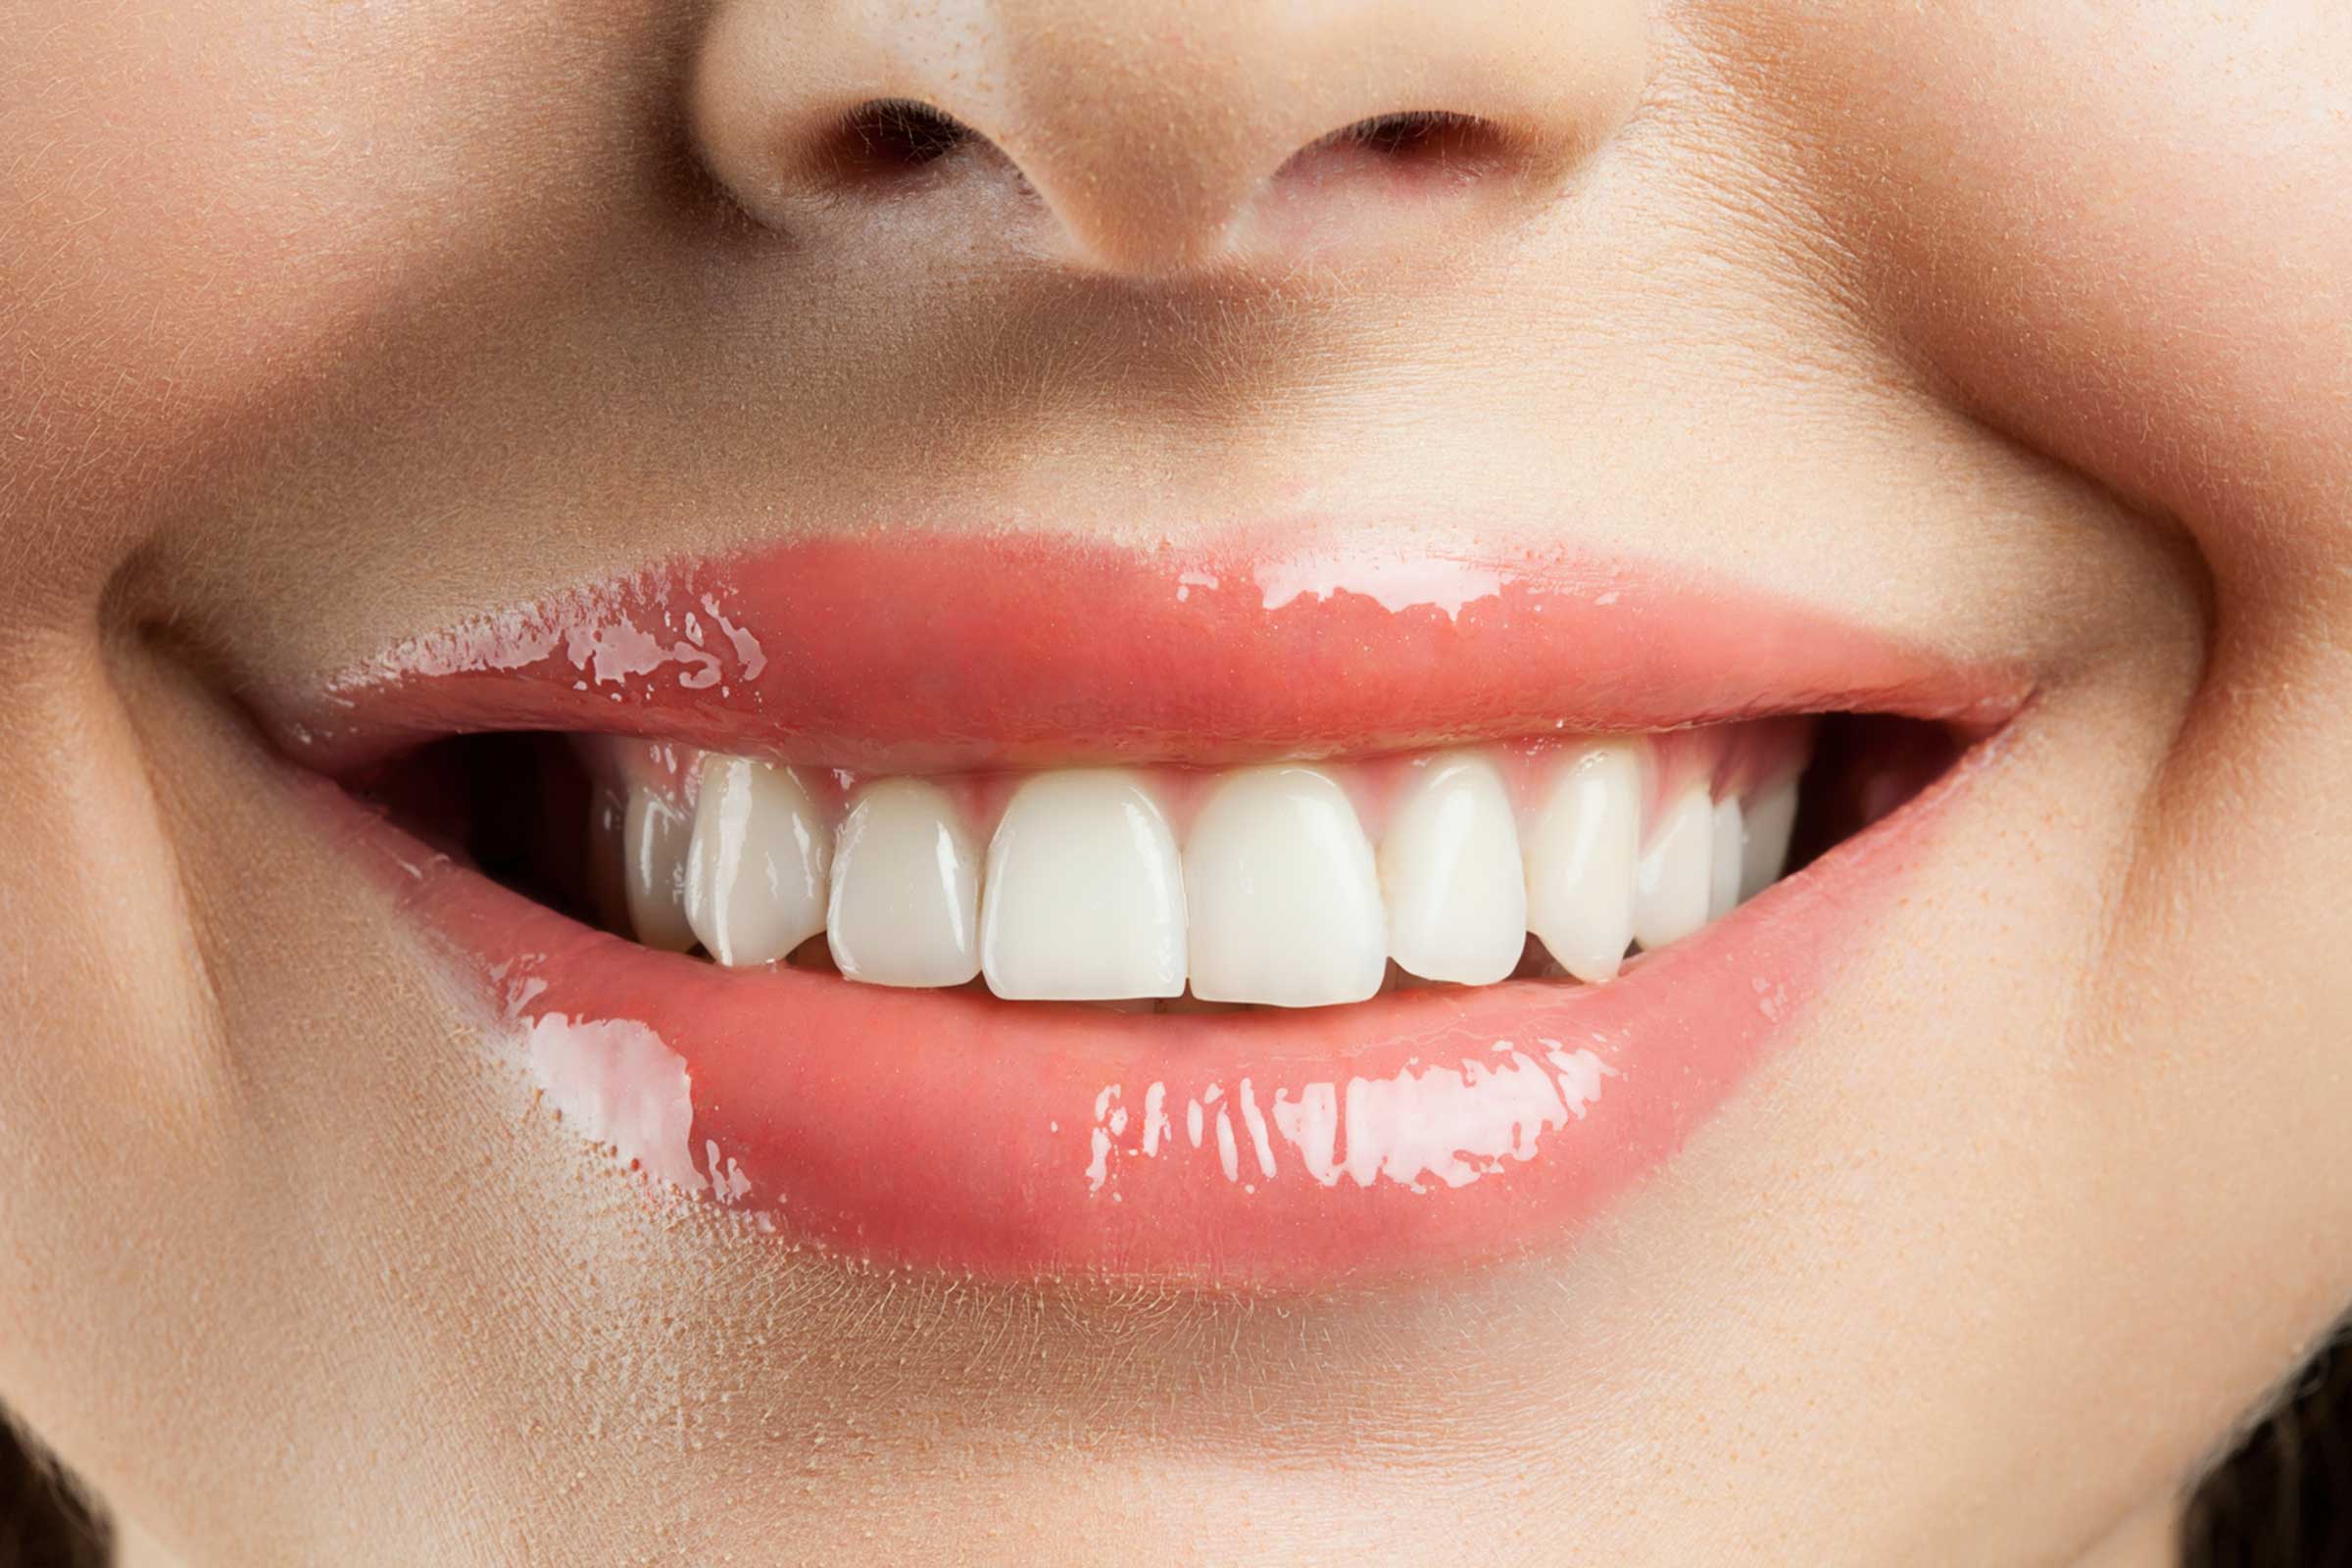 Форма зубов клыки. Красивые зубы. Красивые ровные зубы. Красивая форма зубов. Красивая улыбка зубы.